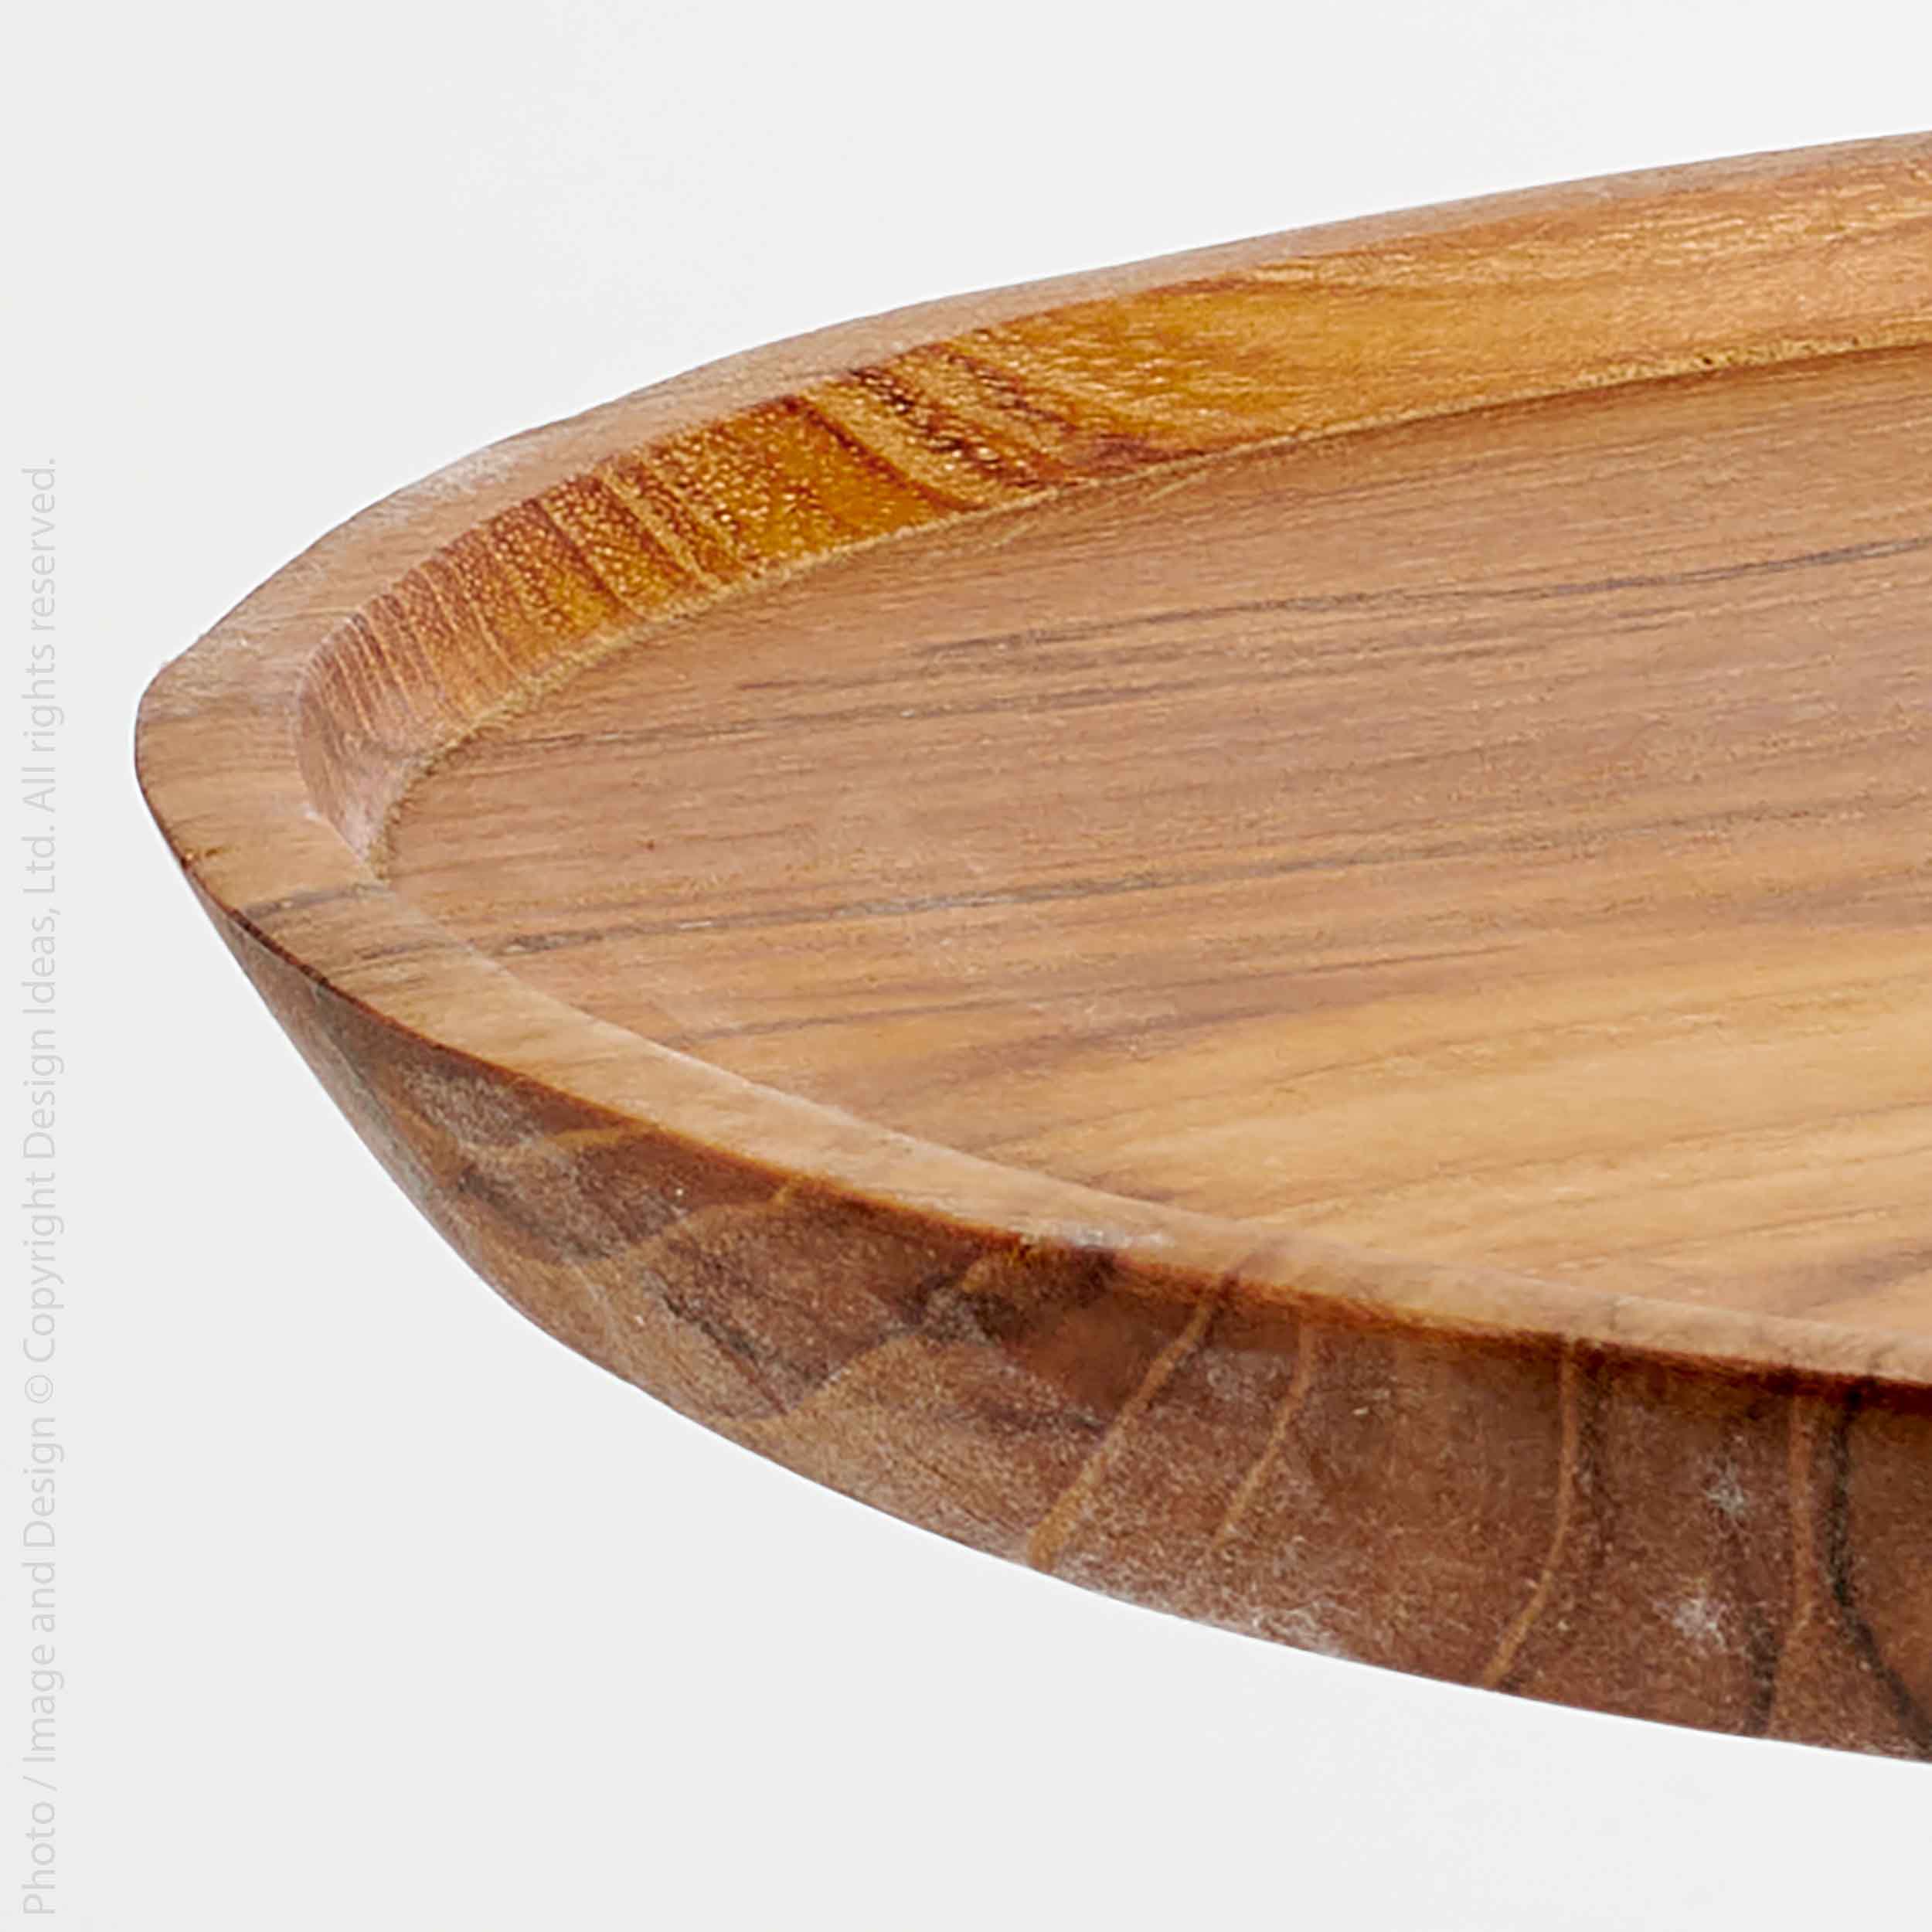 Chiku™ carved teak wood riser (8 dia. x 2.5 in.)